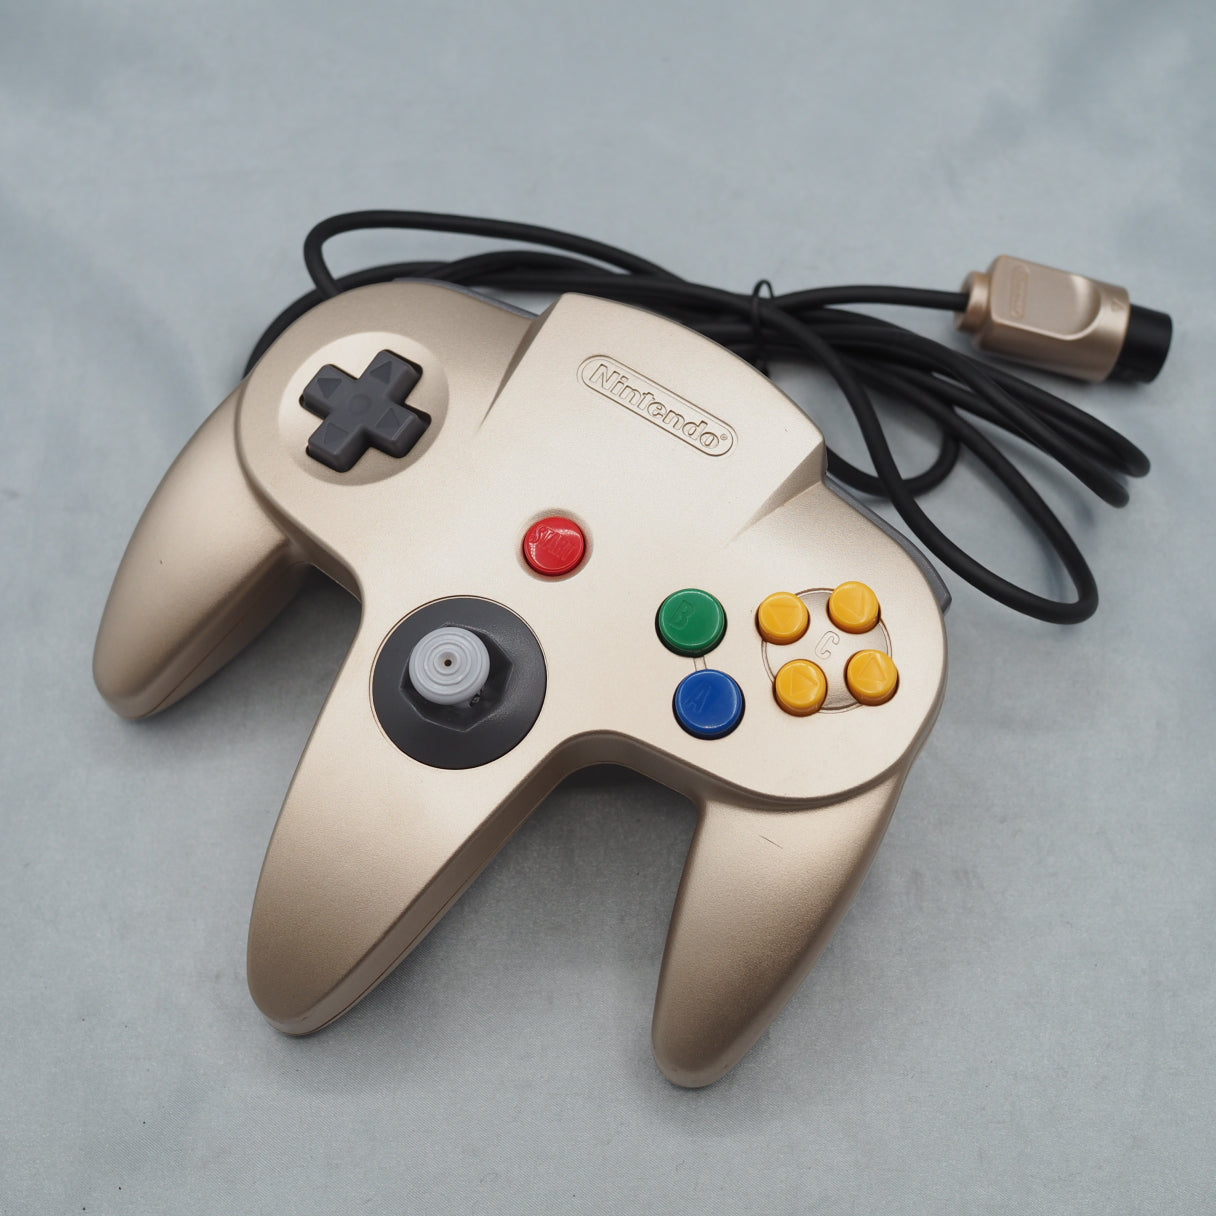 Nintendo 64 Console System GOLD NUS-001 [Region Free]